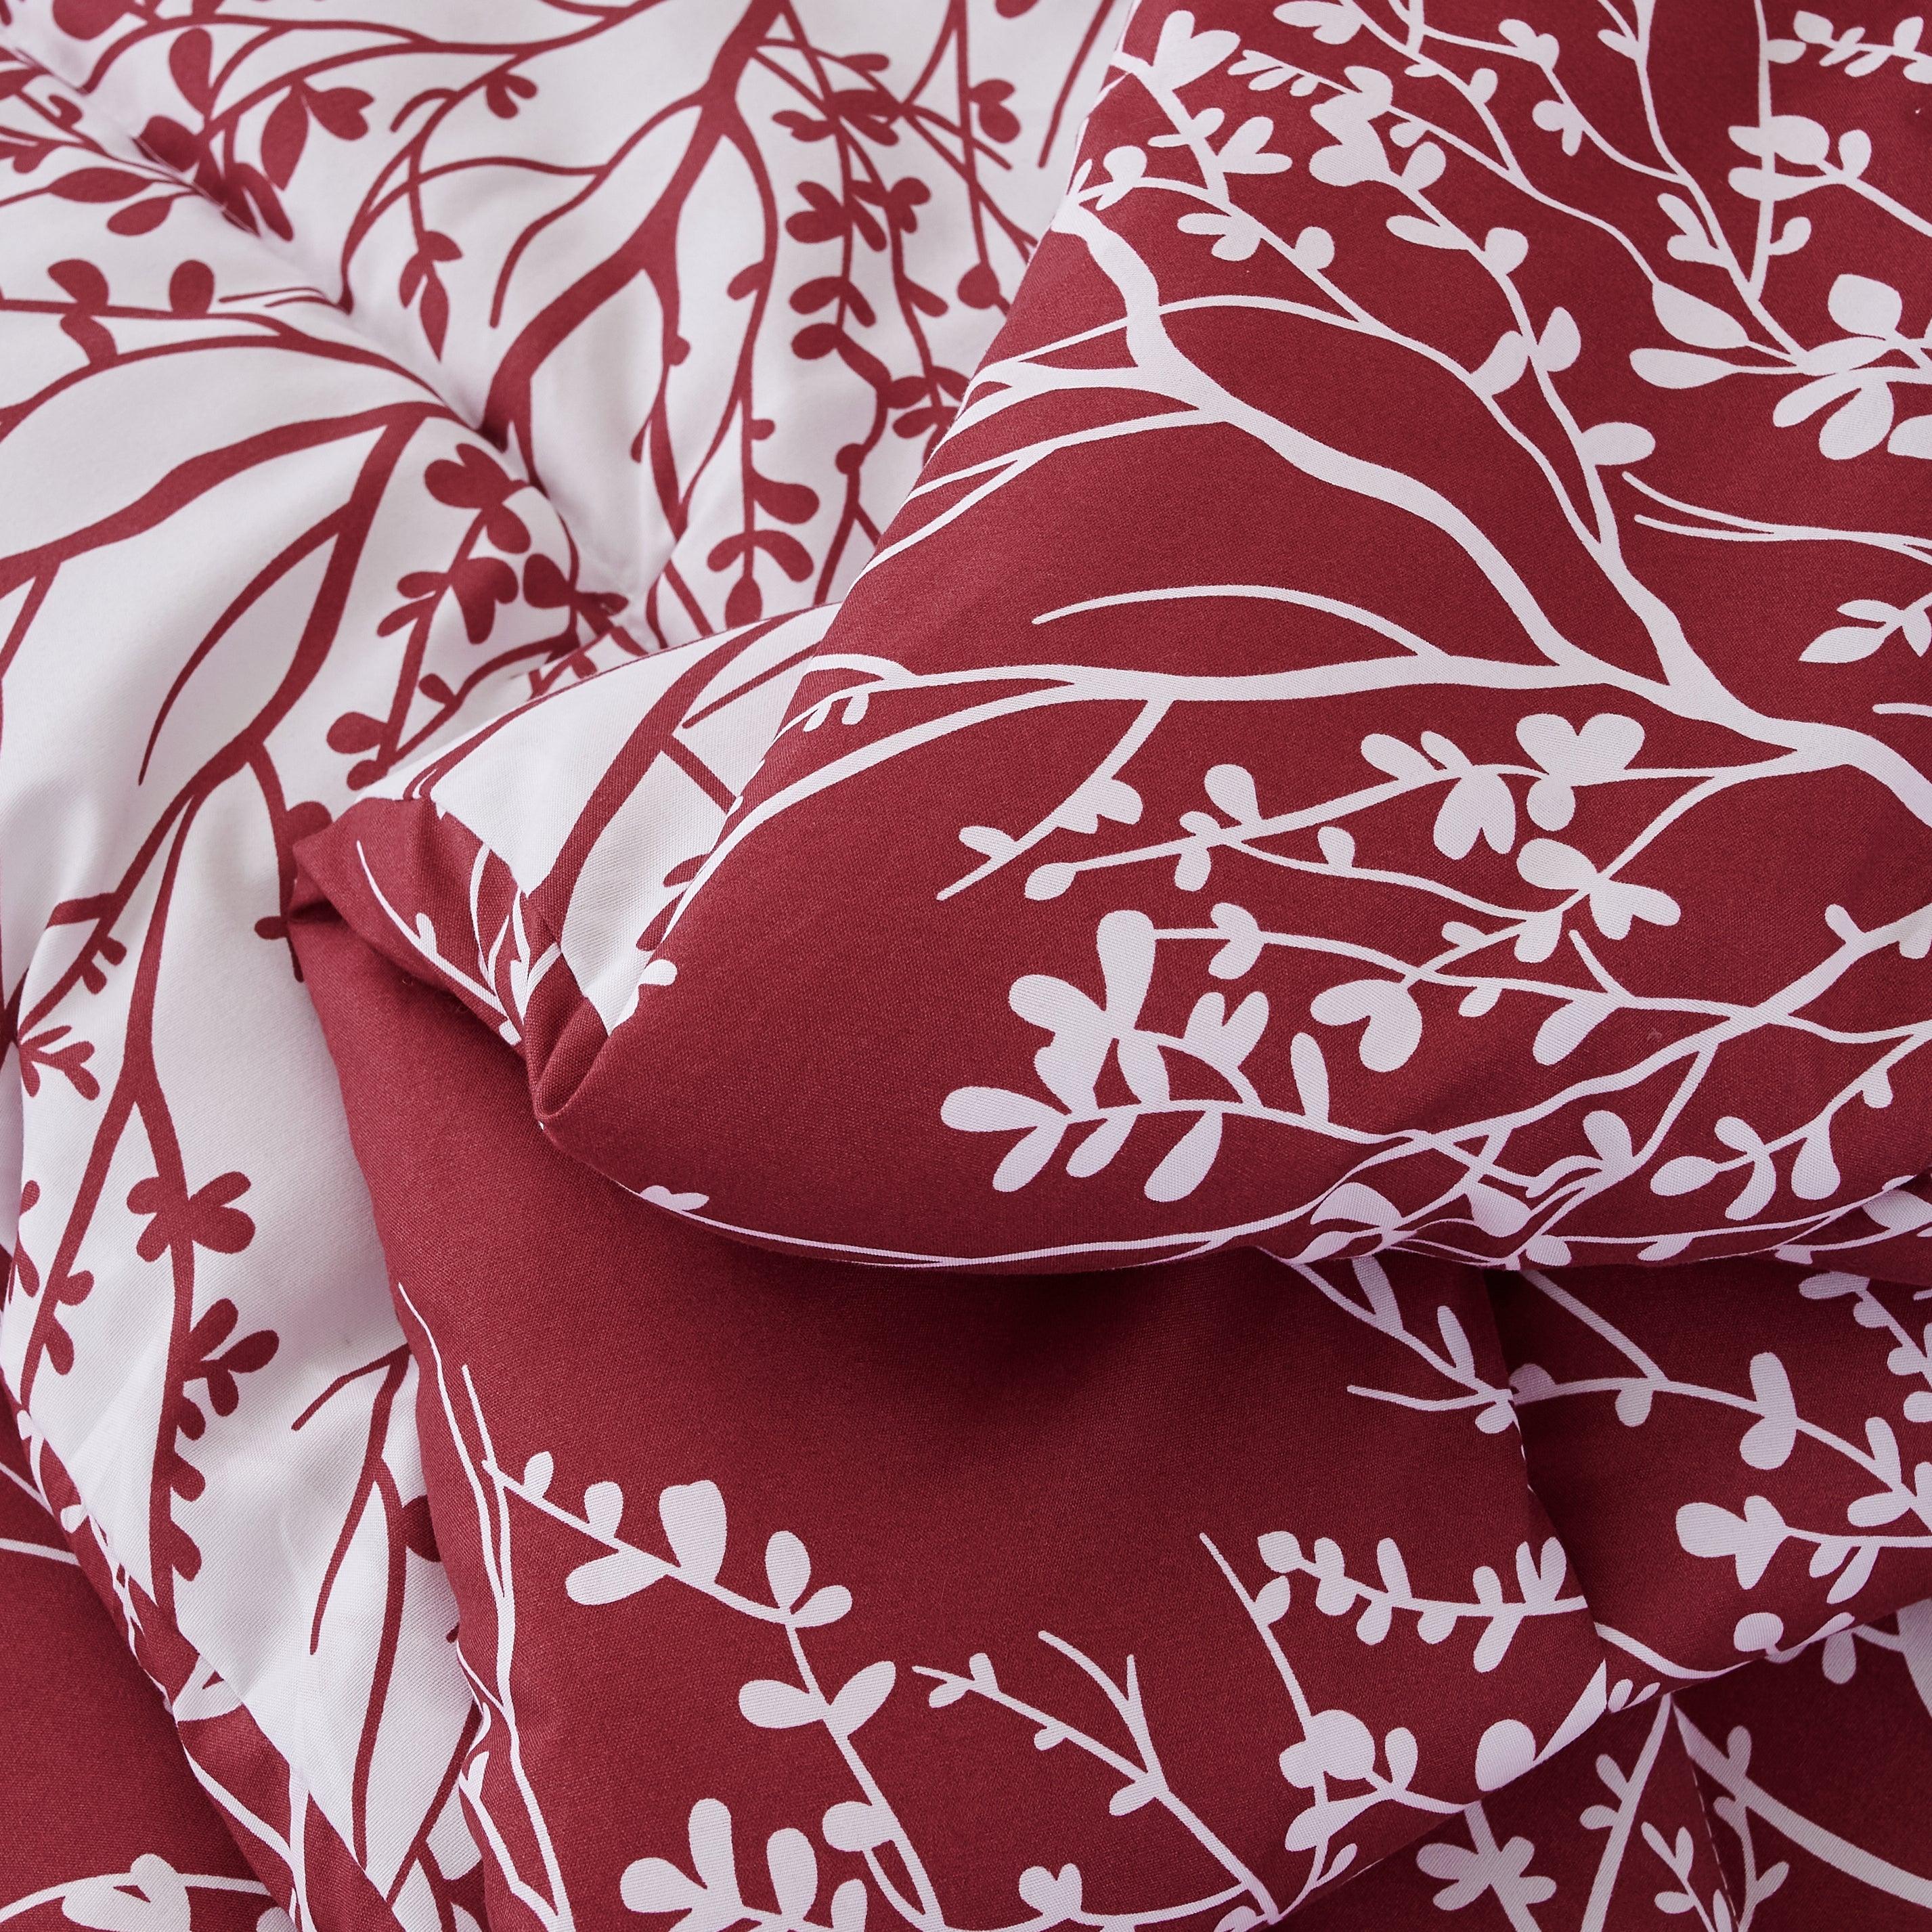 Foliage Reversible Comforter Set + Two Free Sham Pillows - Spirit Linen - Burgundy